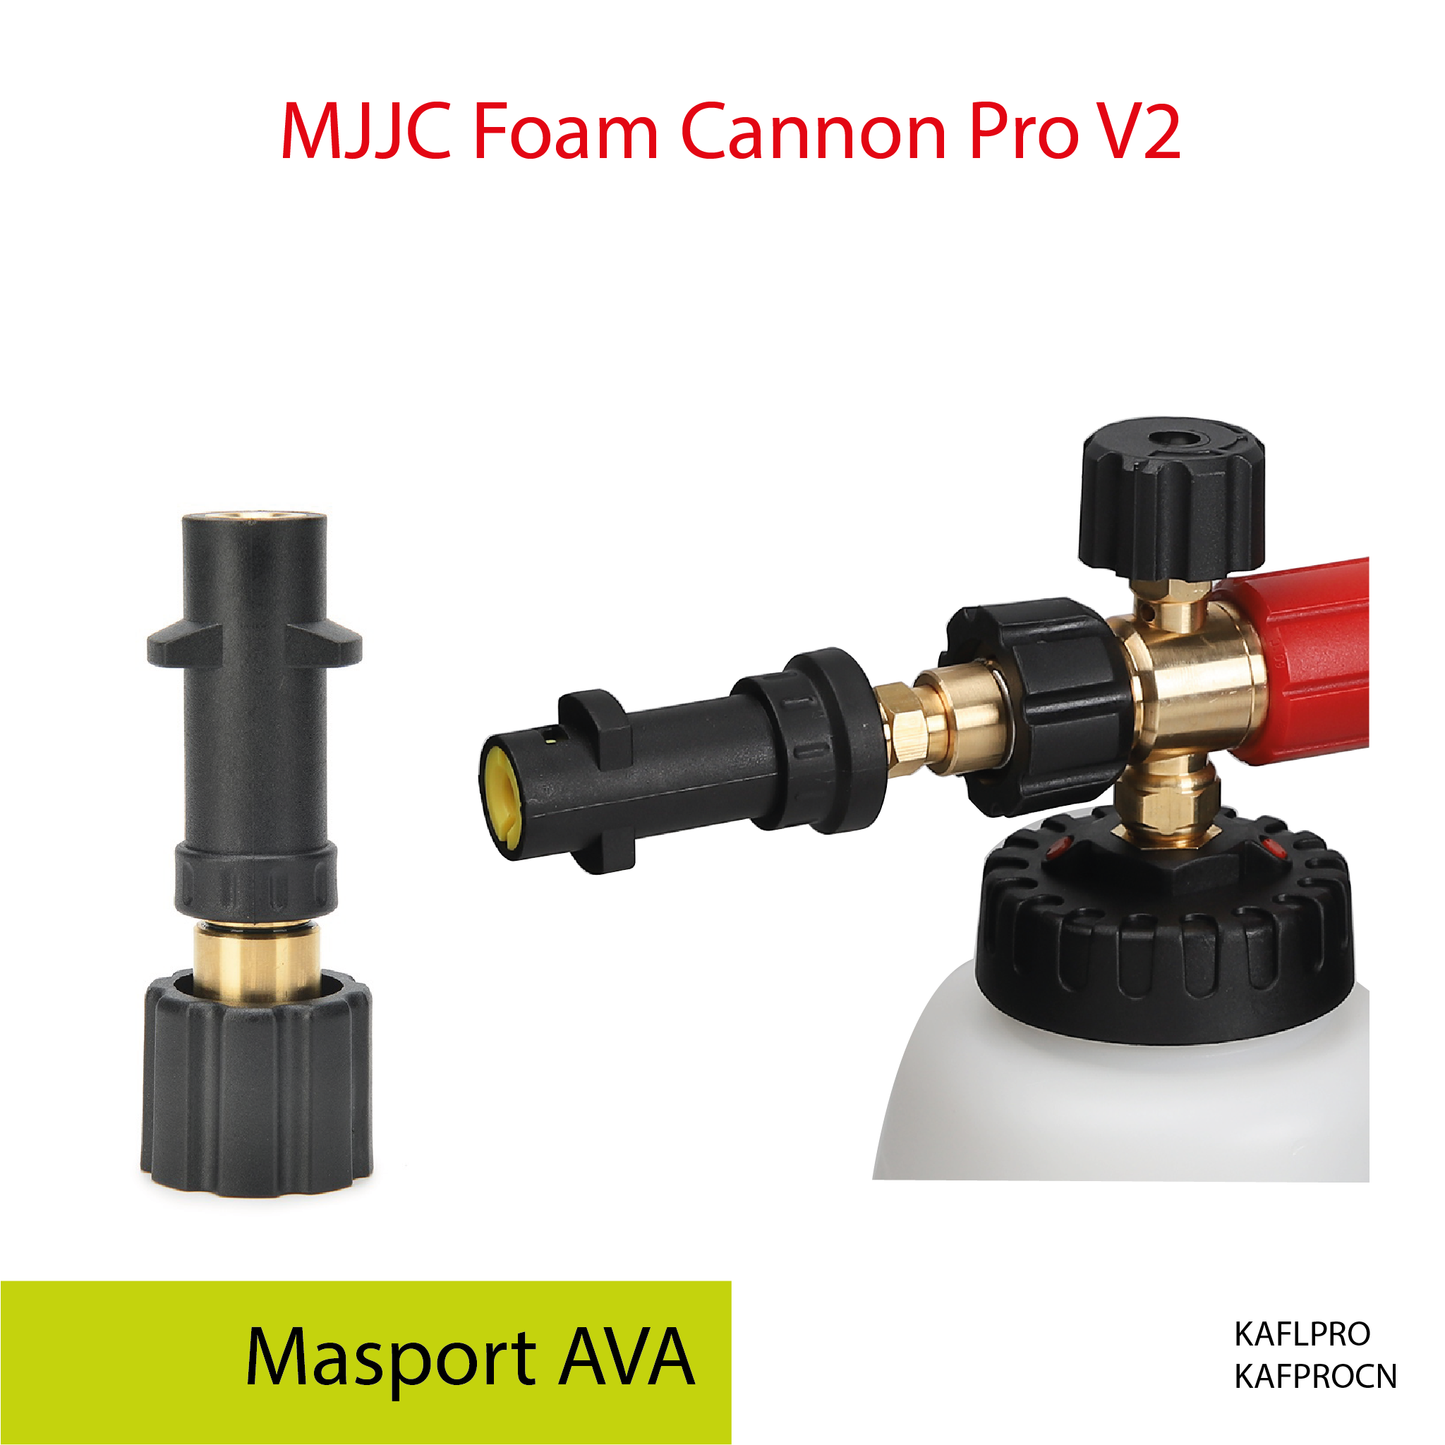 Masport AVA pressure washer - MJJC Foam Cannon Pro V2 (Pressure Washer Snow Foam Lance Gun)